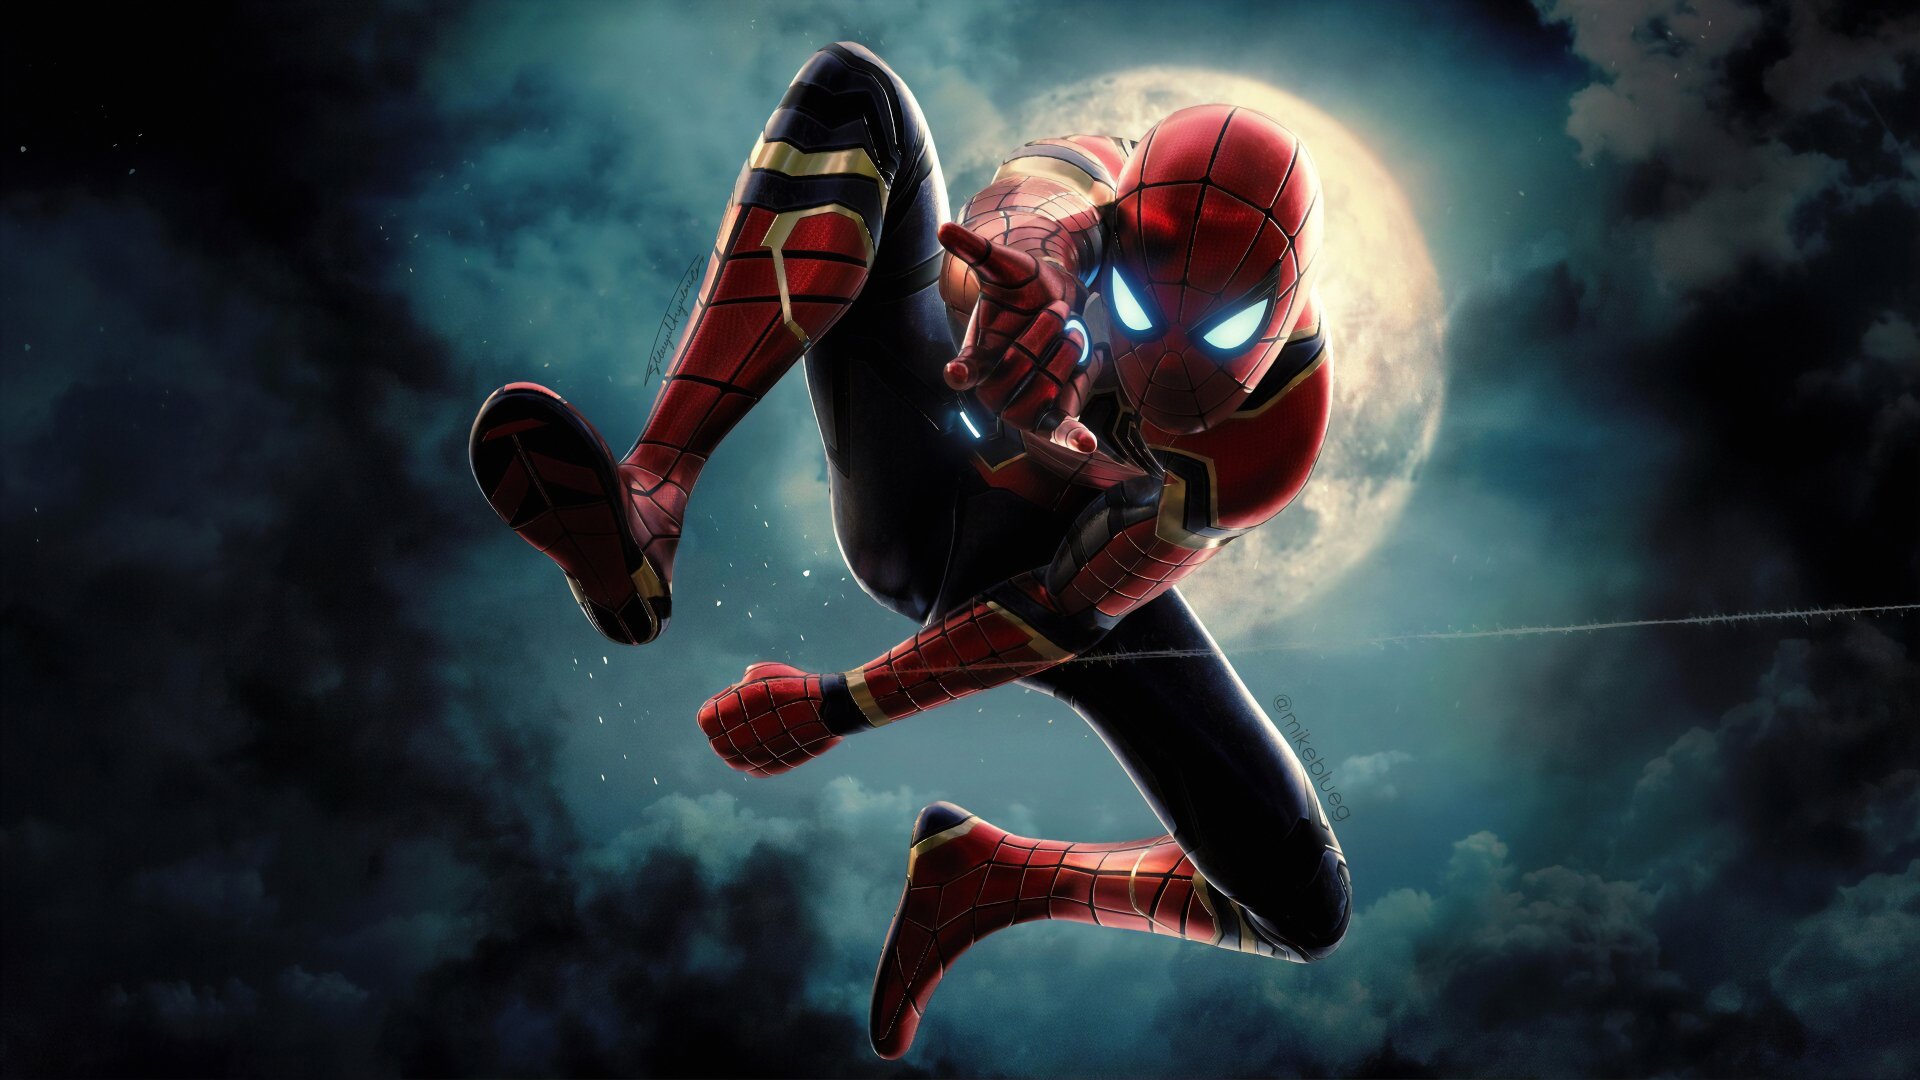 Spider-Man 4k Ultra HD Wallpaper Background Image 3840x2160.